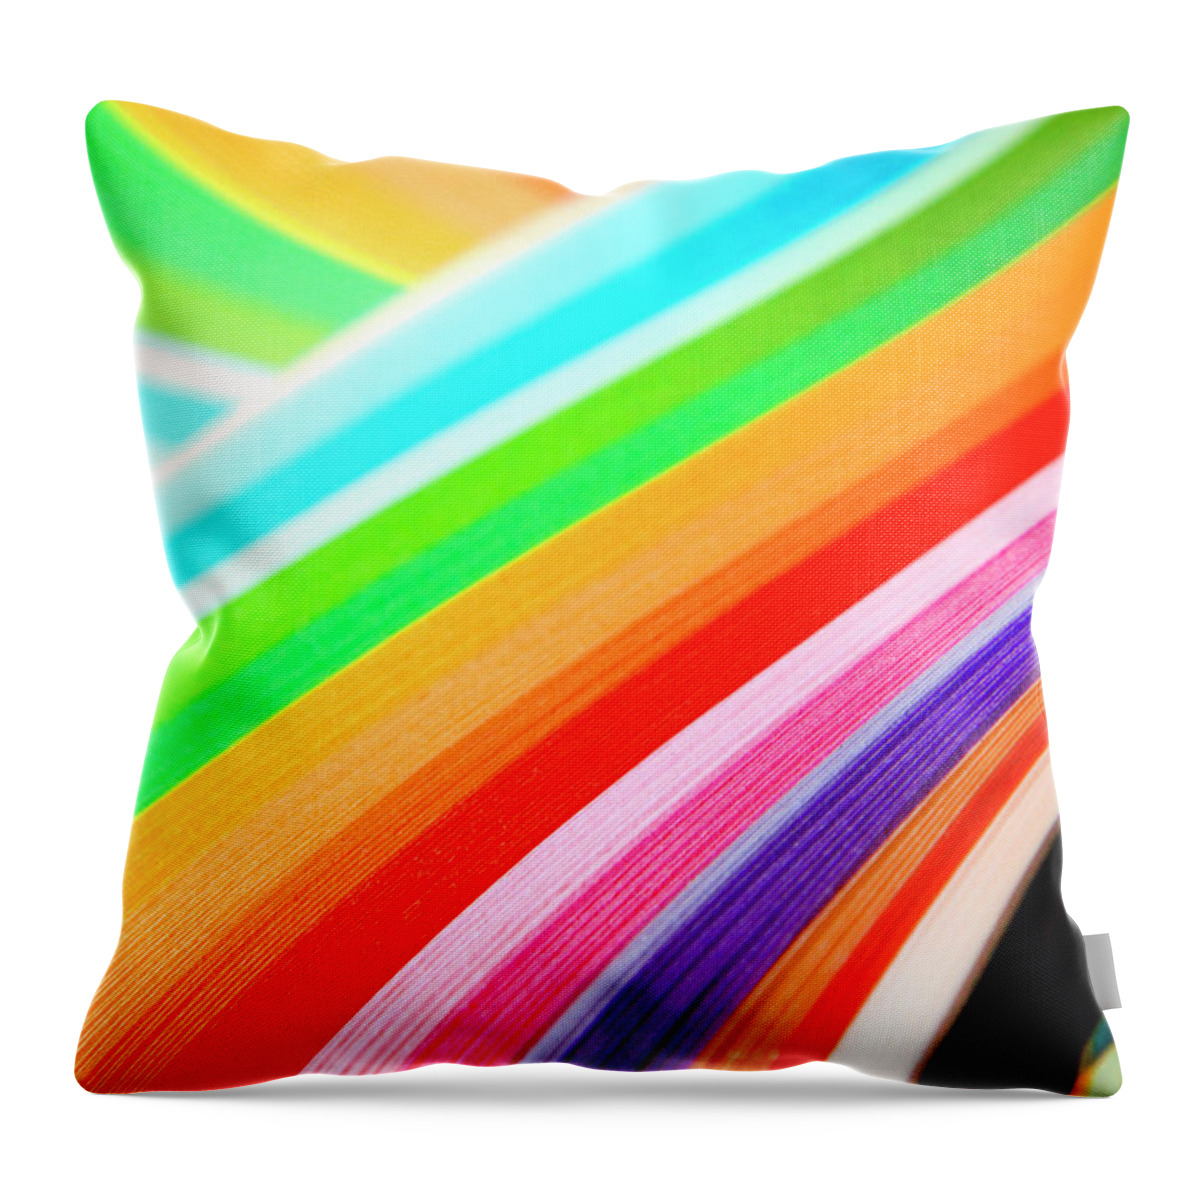 Dublin Throw Pillow featuring the photograph Rainbow Colour by Michelle O'kane